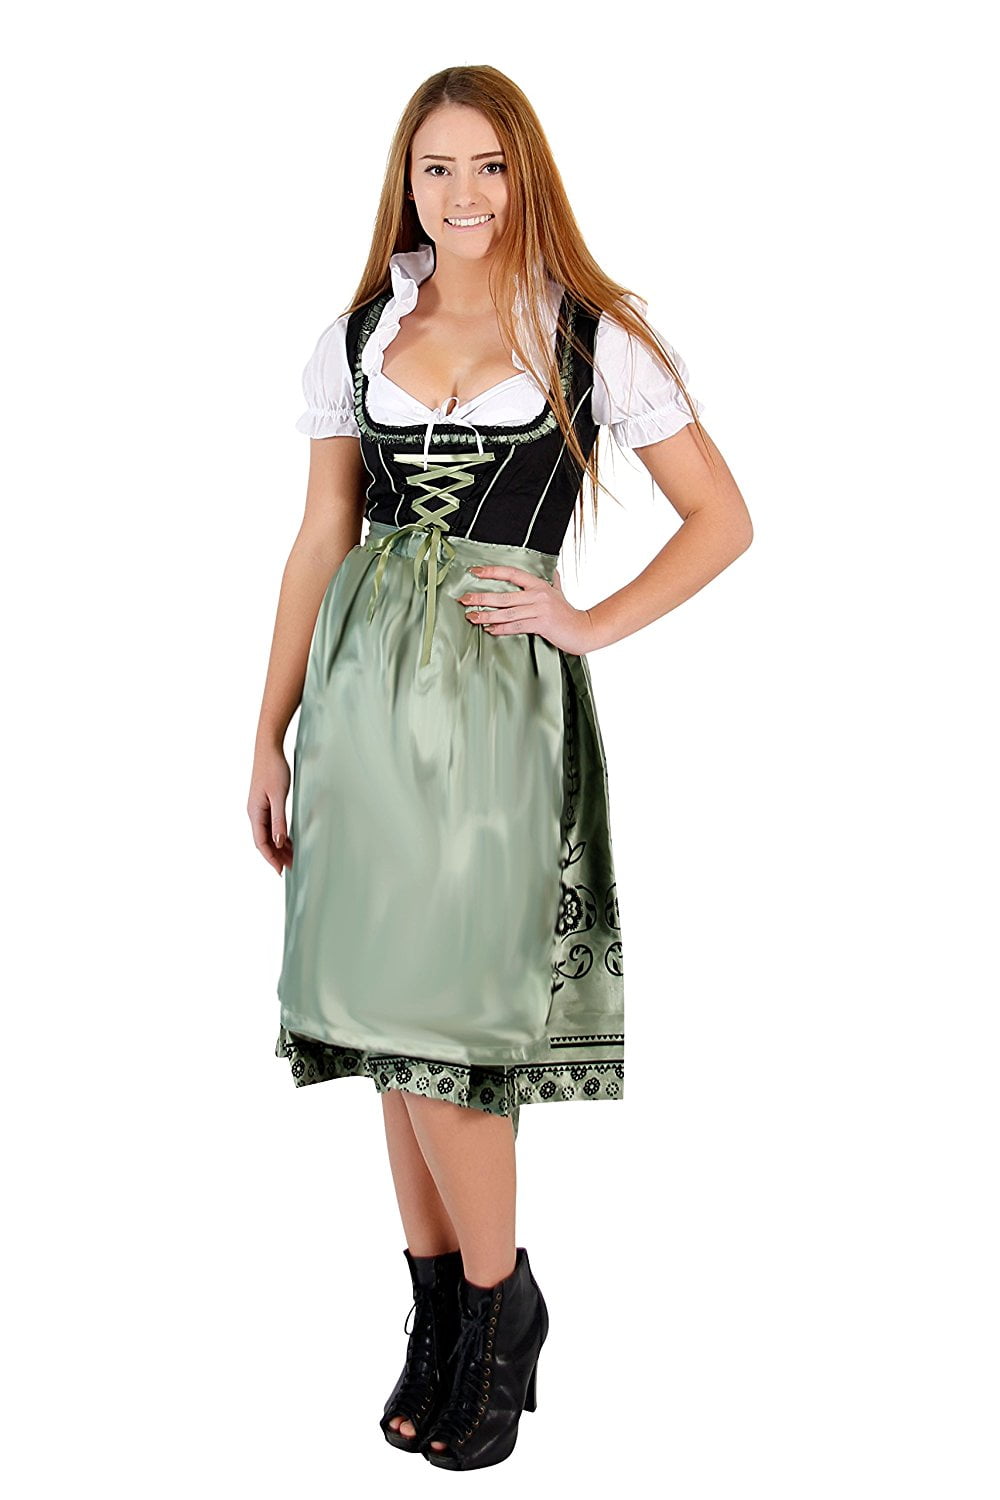 Oktoberfest Drindl Bavarian German Beer Girl Green Maid Costume Dress 